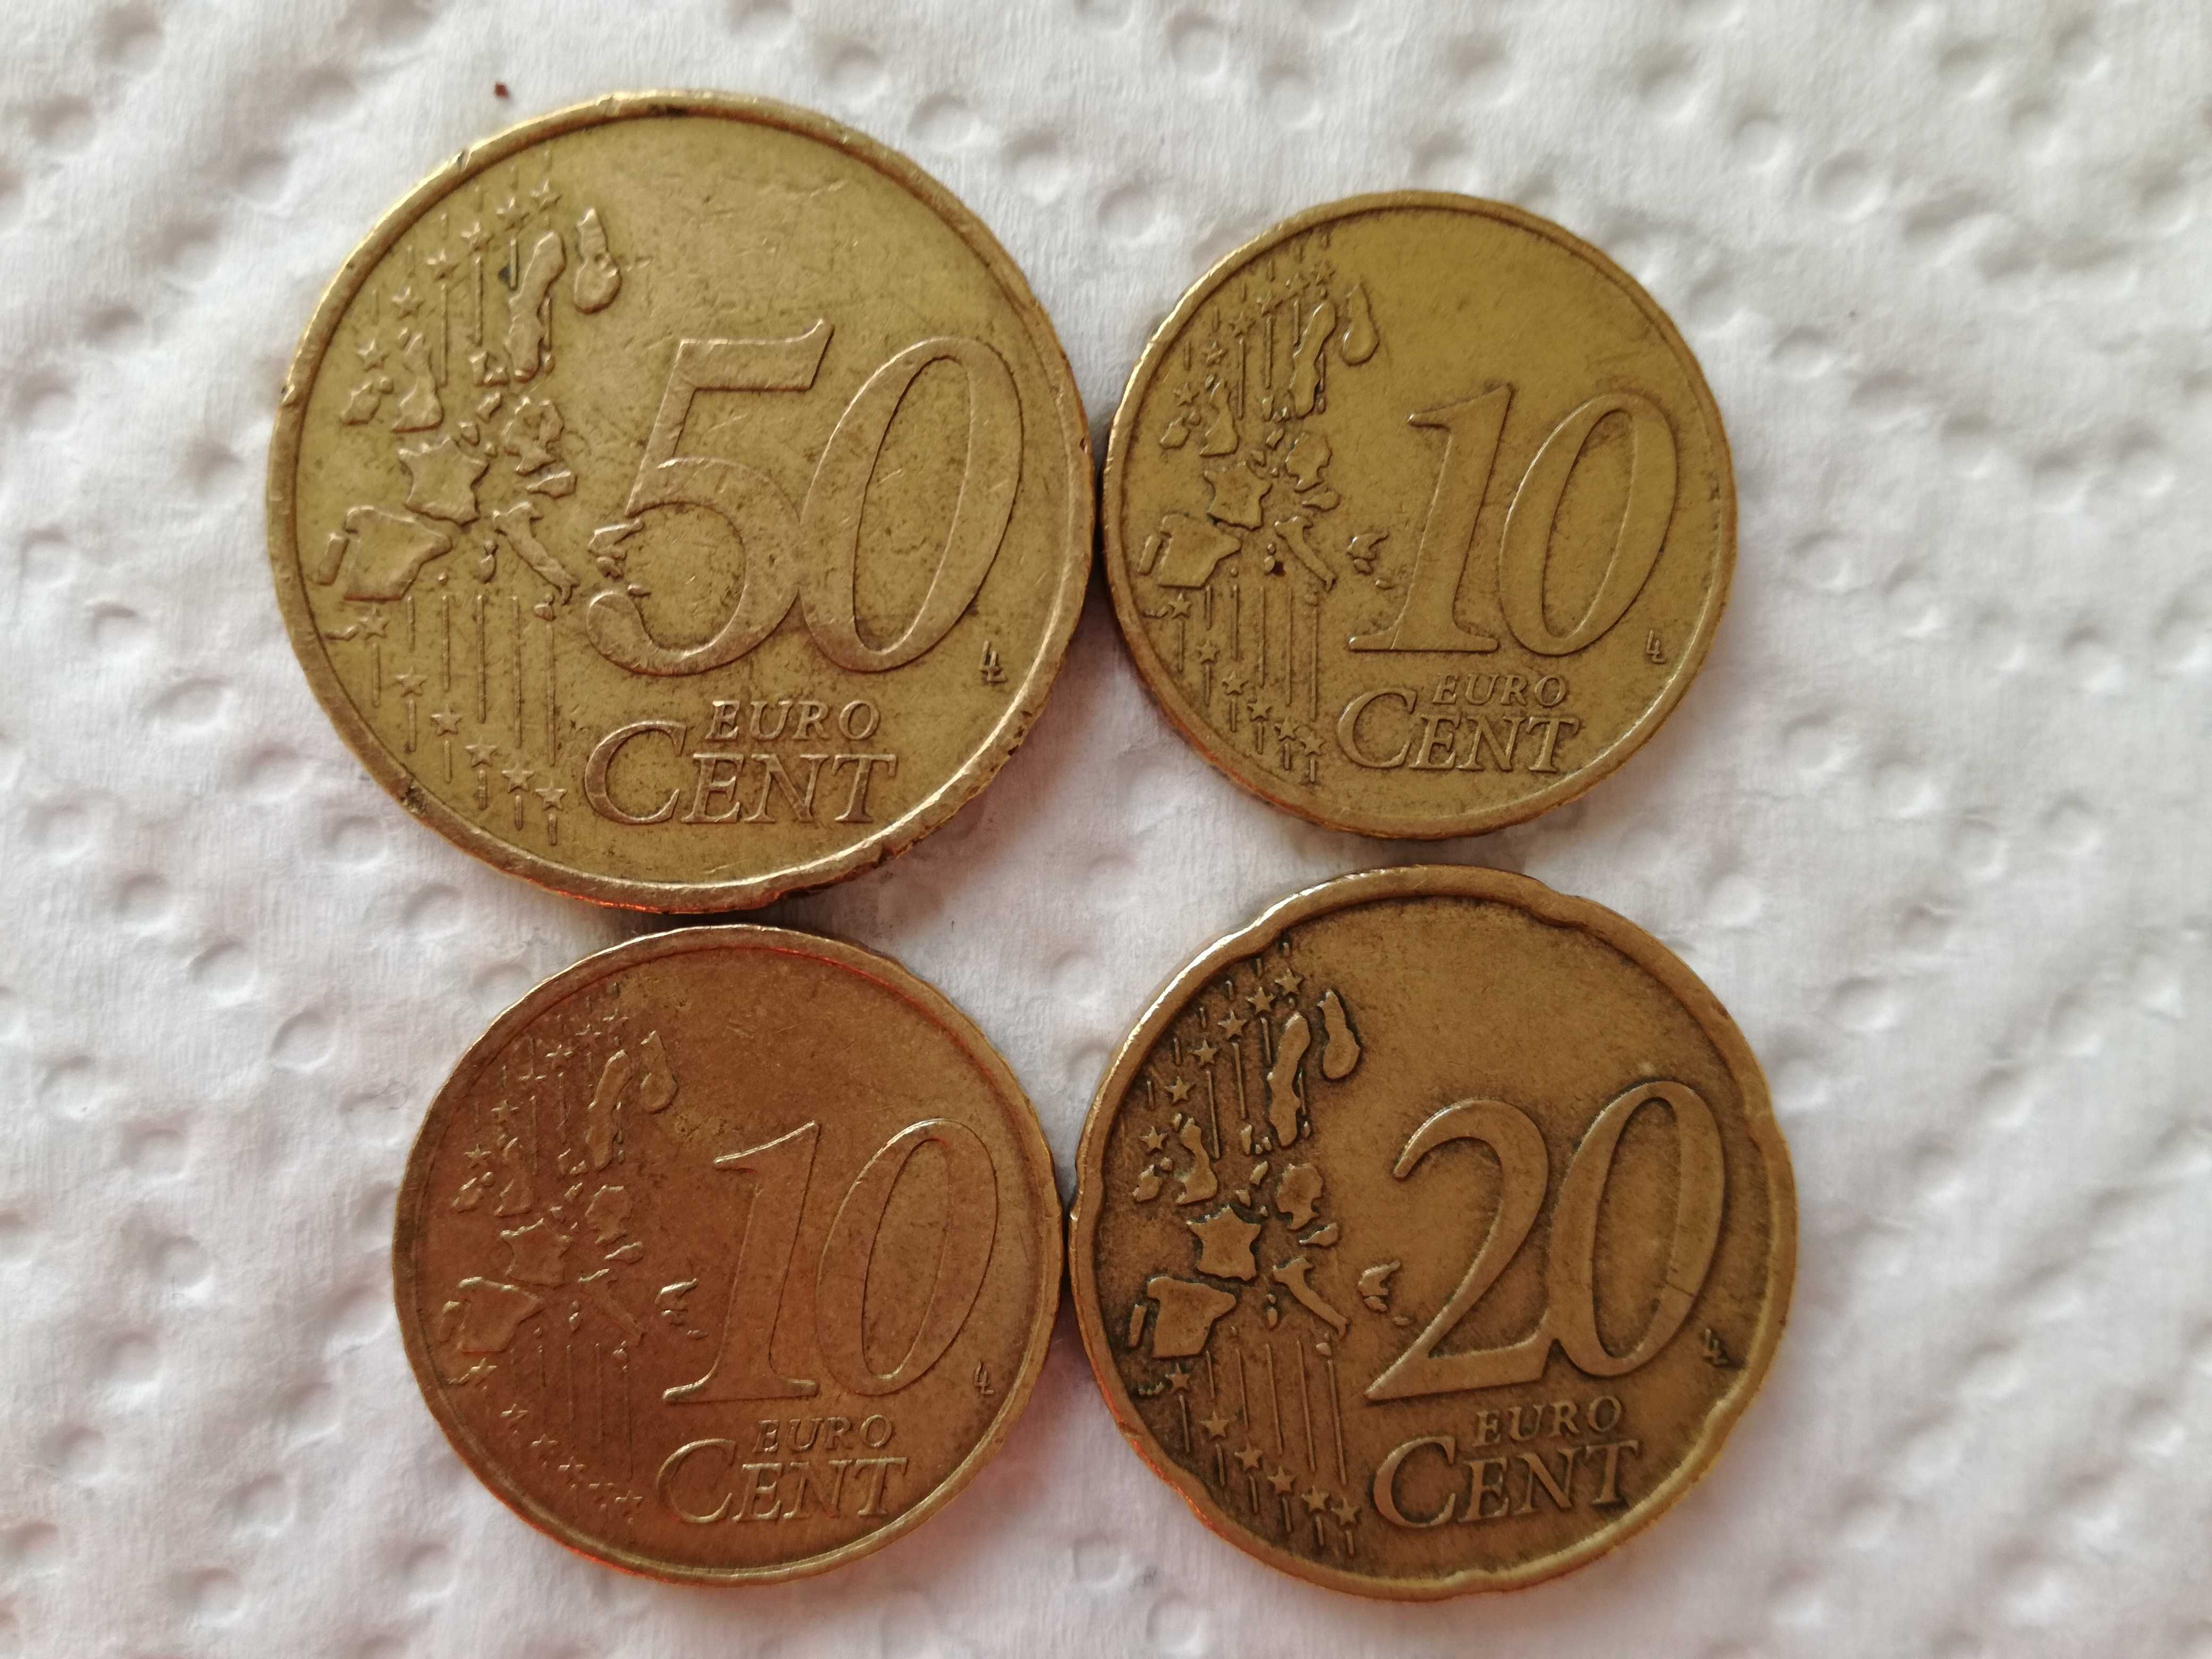 Vand monede euro centi Portugalia 2002 Spania Irlanda Lituania